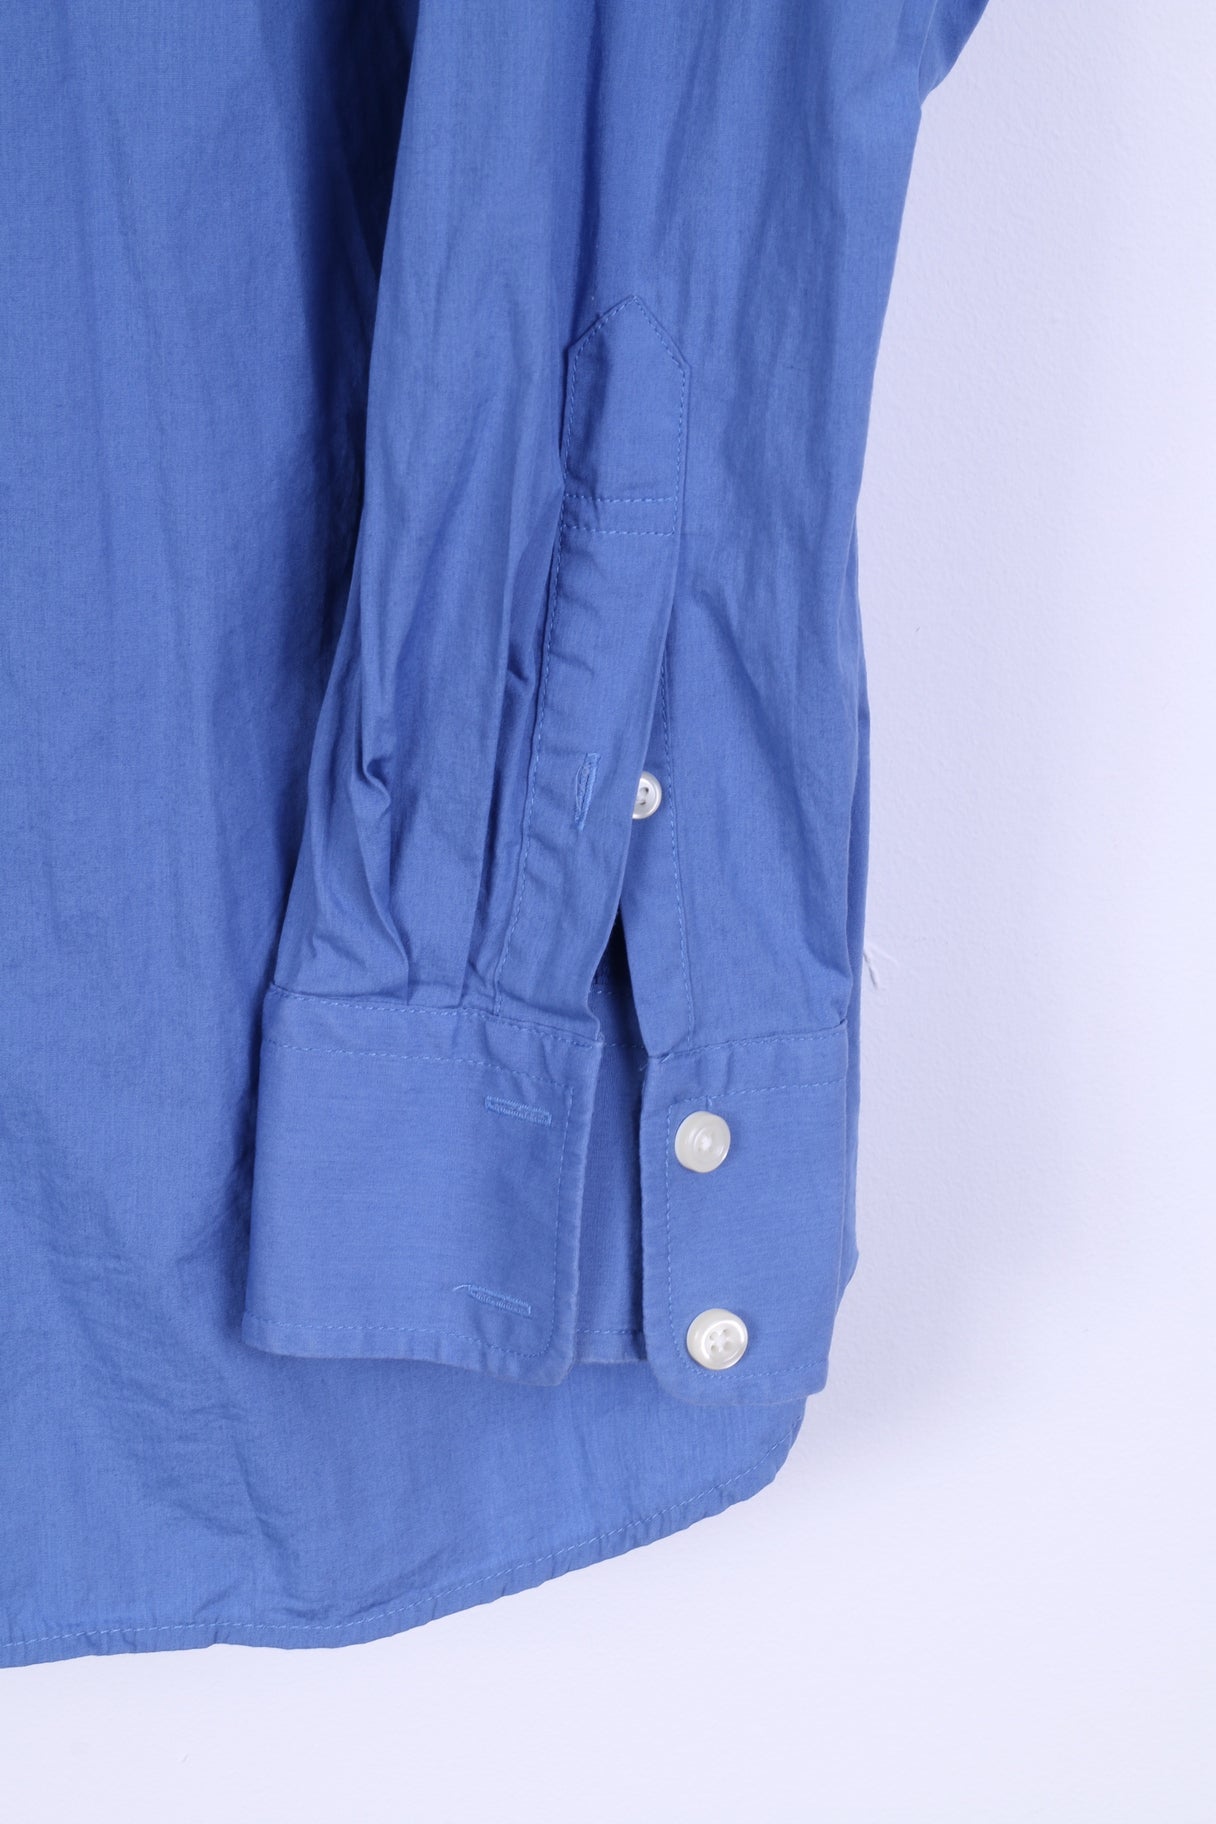 GAP Mens XL Casual Shirt Blue Cotton Stretch Long Sleeve